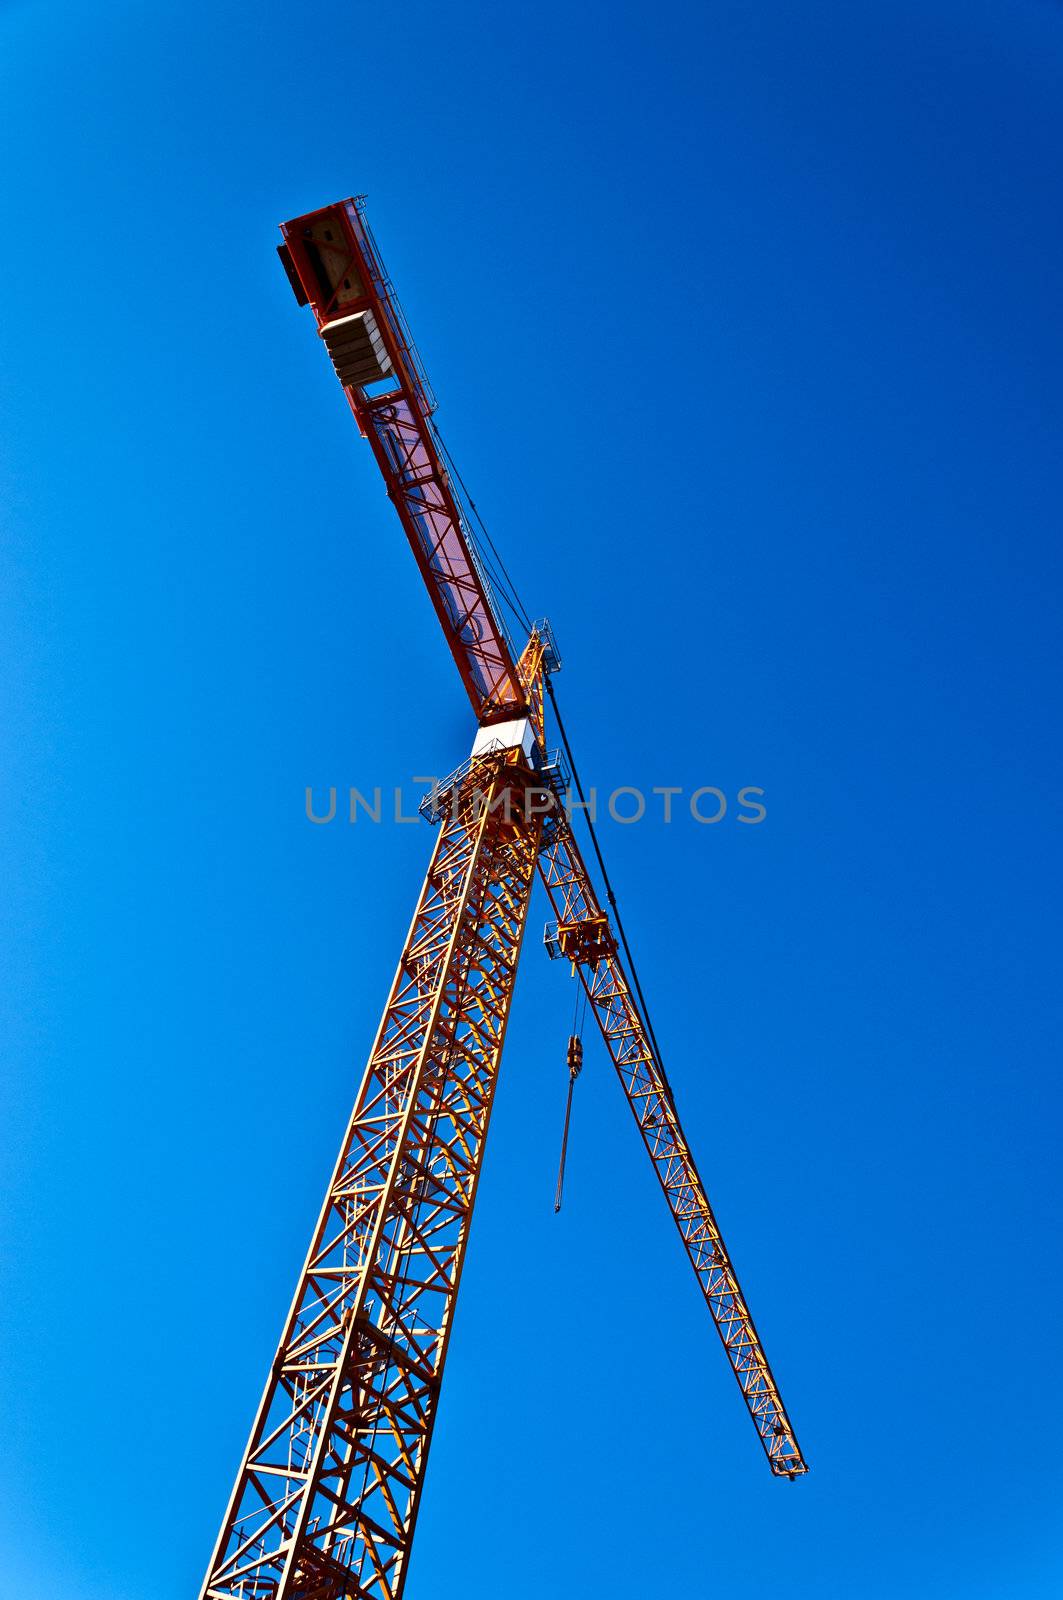 Tower crane on blue background by Nanisimova